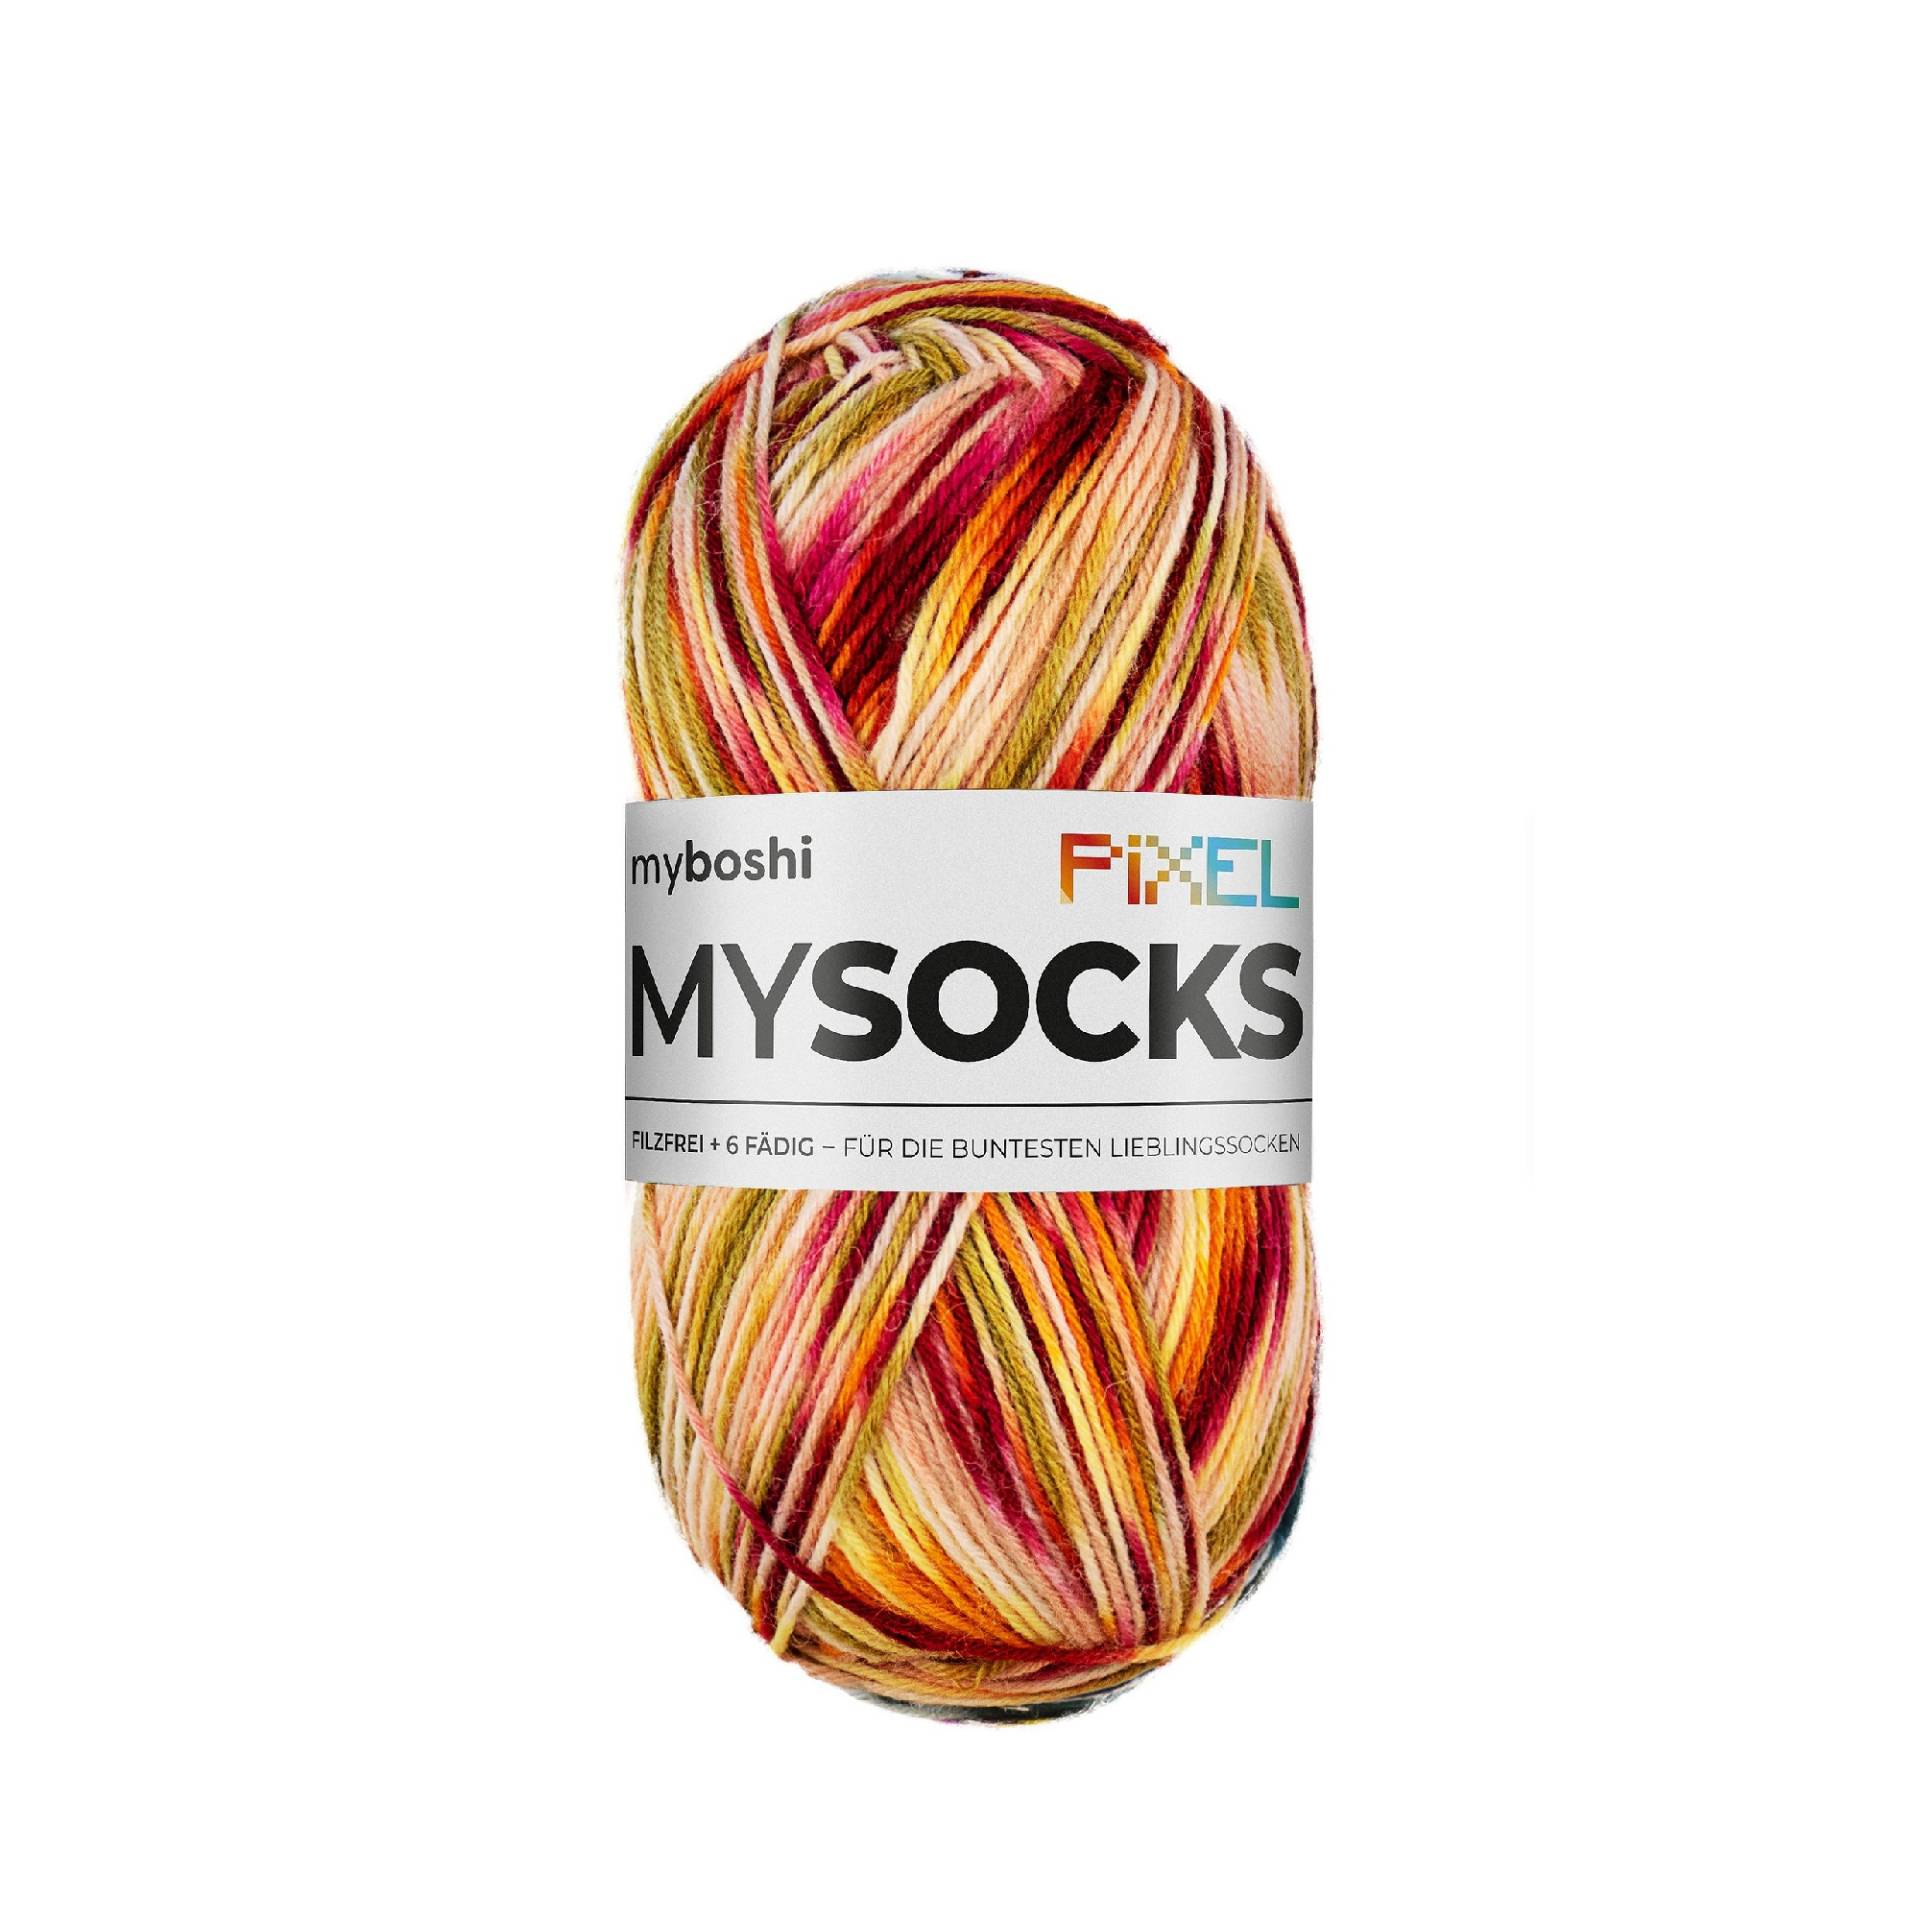 myboshi mysocks Pixel 6-fädige Sockenwolle Virex 150g, rot-gelb von Stoffe Hemmers